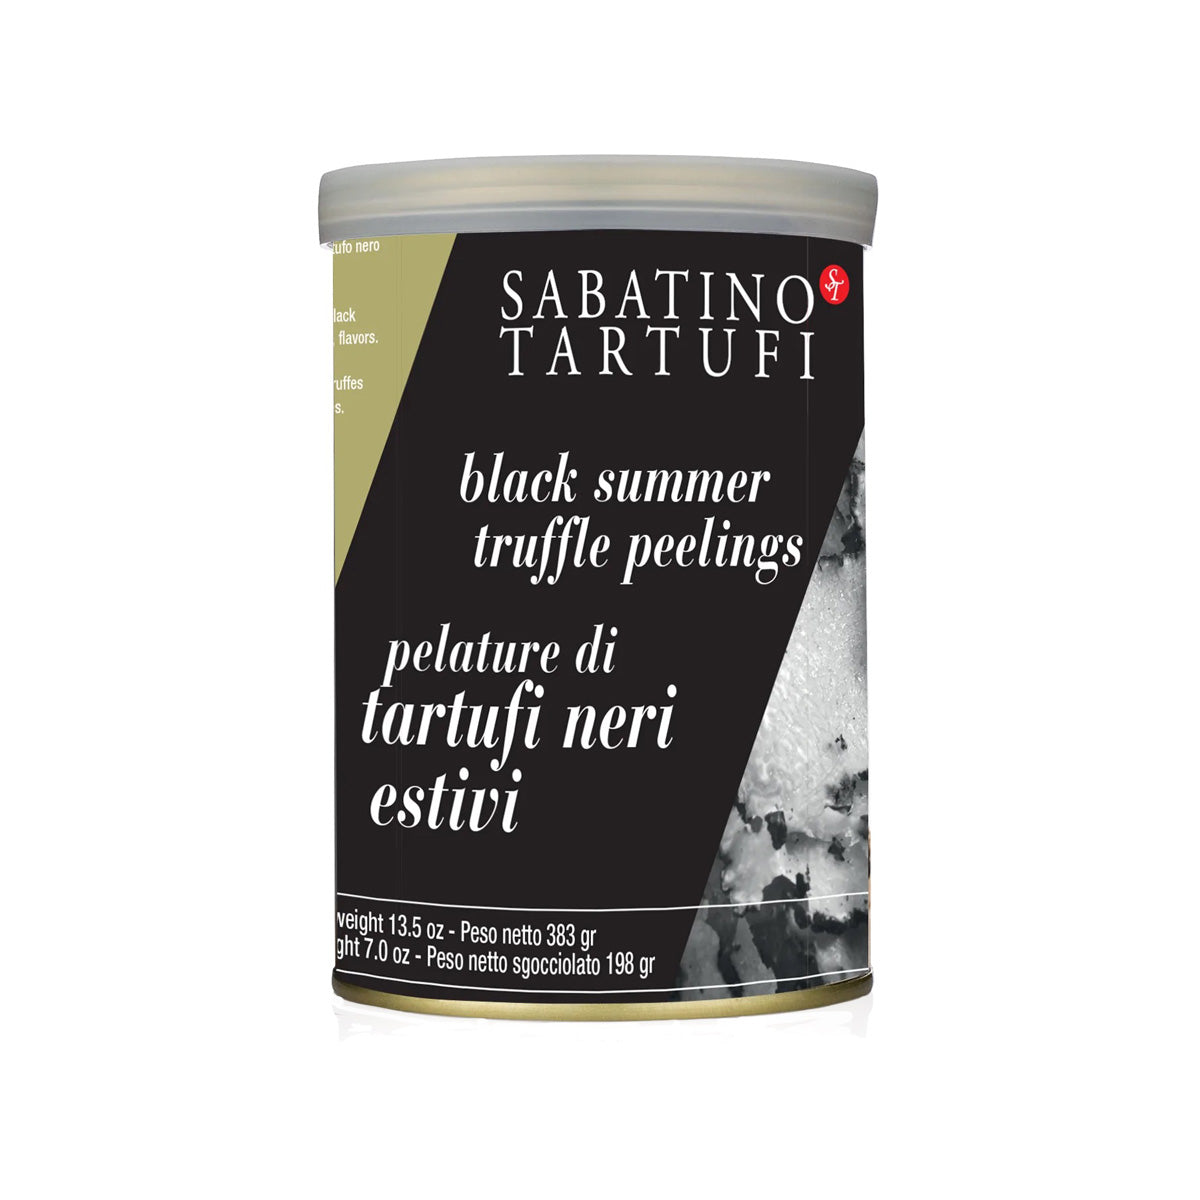 Sabatino Tartufi Black Summer Truffle Peelings